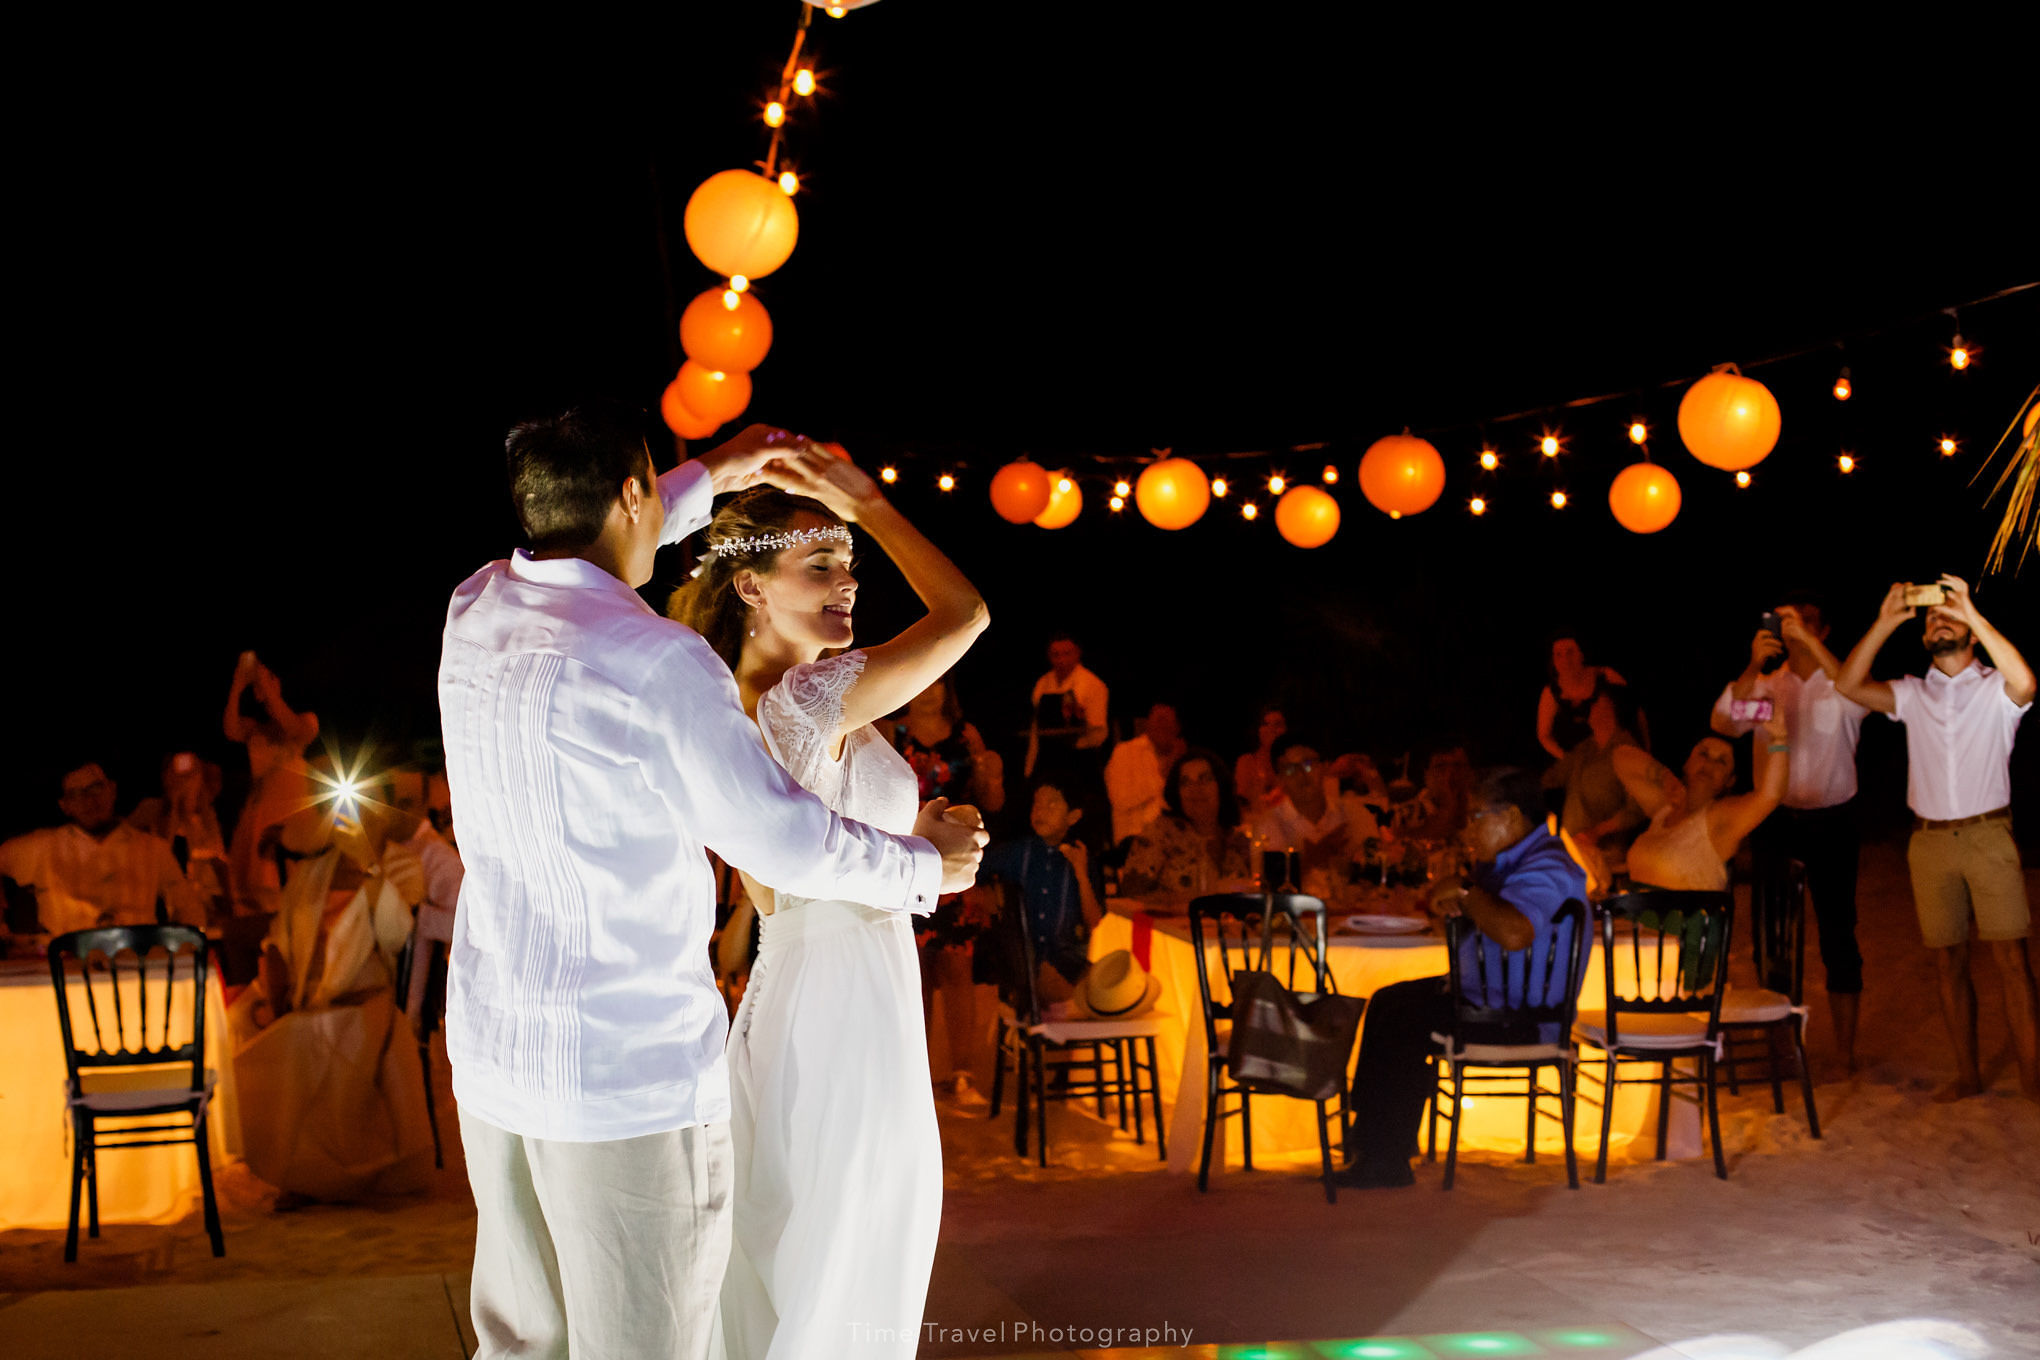 TIMETRAVEL_WEDDING_PHOTOGRAPHY_YUCATAN_DESTINATION_TECNOHOTEL_BEACH_DANCE.jpg